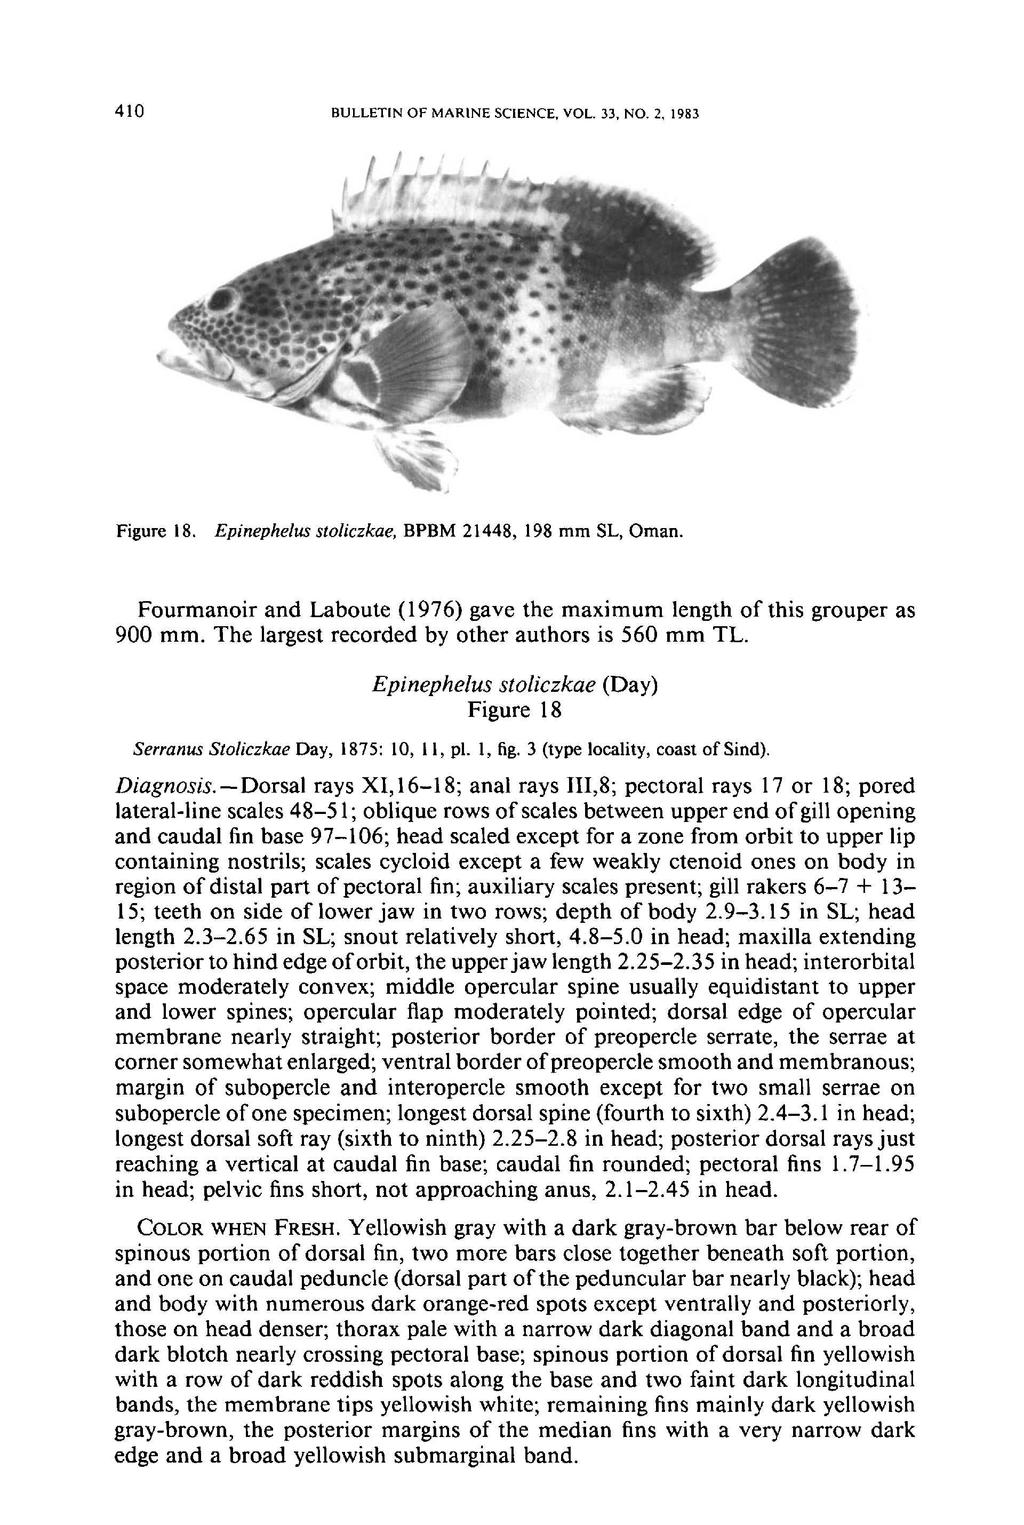 410 BULLETIN OF MARINE SCIENCE, VOL. 33, NO.2, 1983 Figure 18, Epinephelus stoliczkae, BPBM 21448, 198 mm SL, Oman, Fourmanoir and Laboute (1976) gave the maximum length of this grouper as 900 mm.